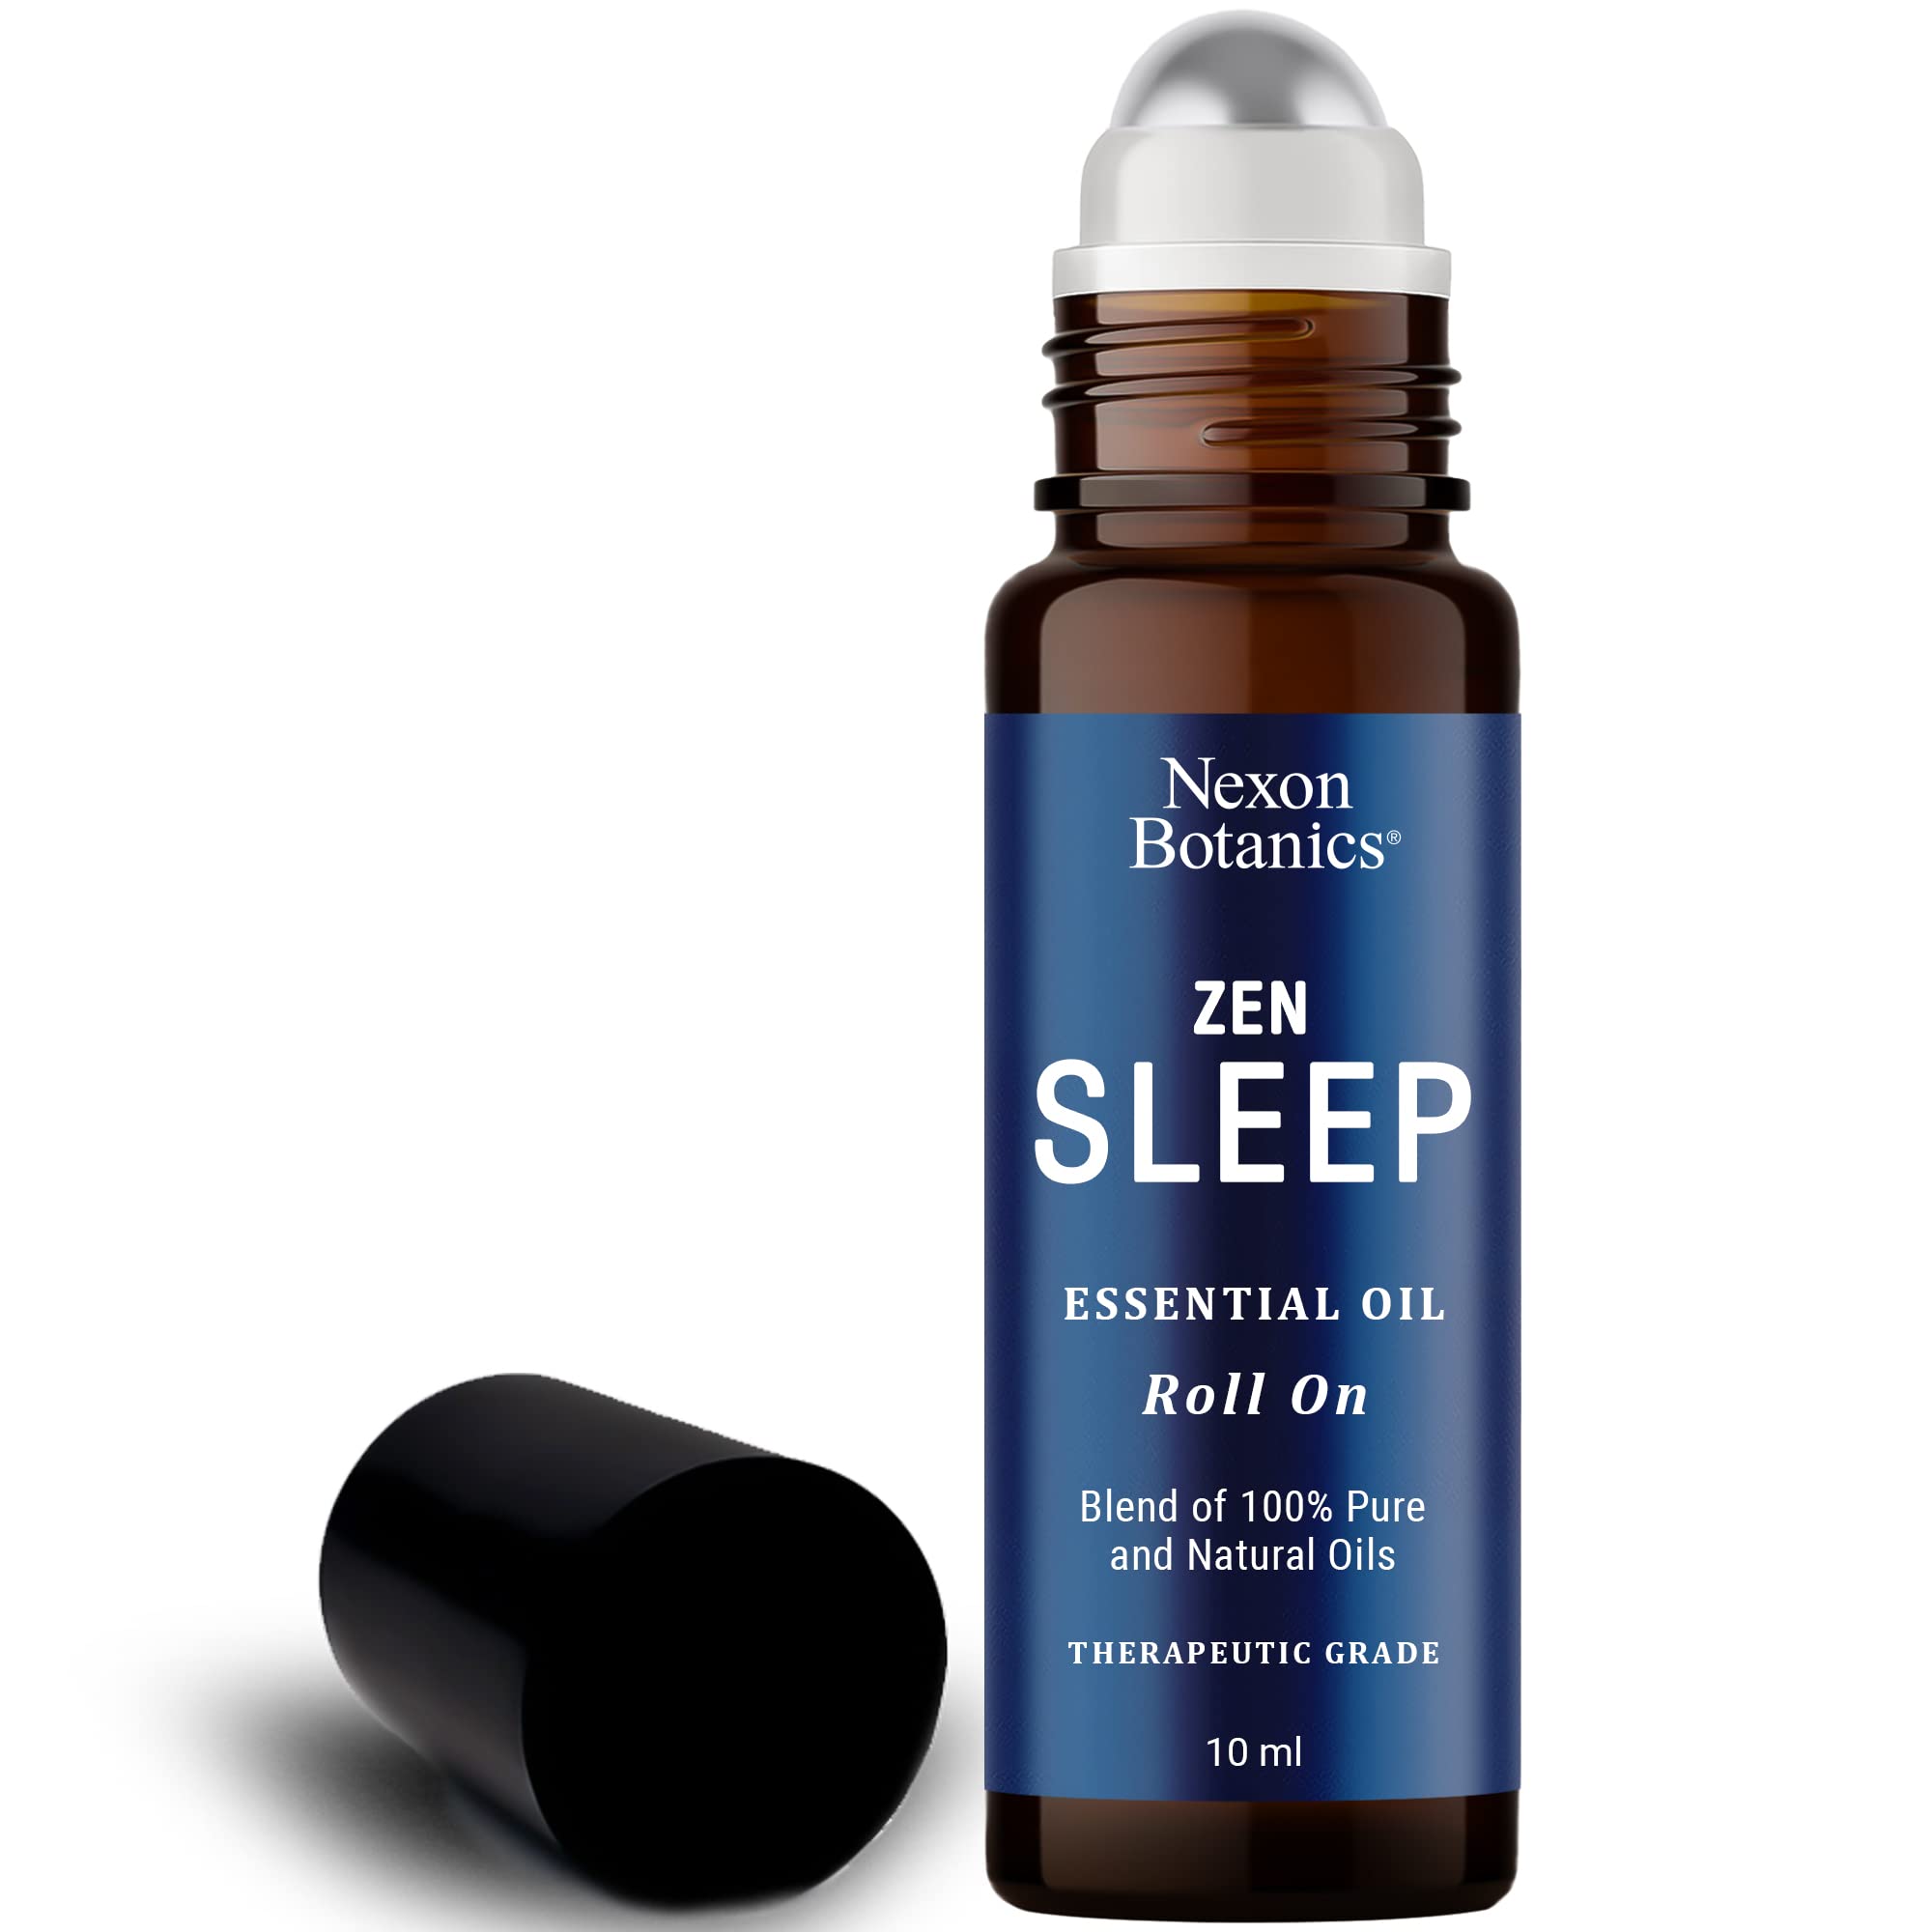 Nexon Botanics Zen Sleep Essential Oil Roll On 10ml - Roll On Sleep Essential Oil - Roll On Essential Oils Sleep - Serenity, Deep Sleep Essenti